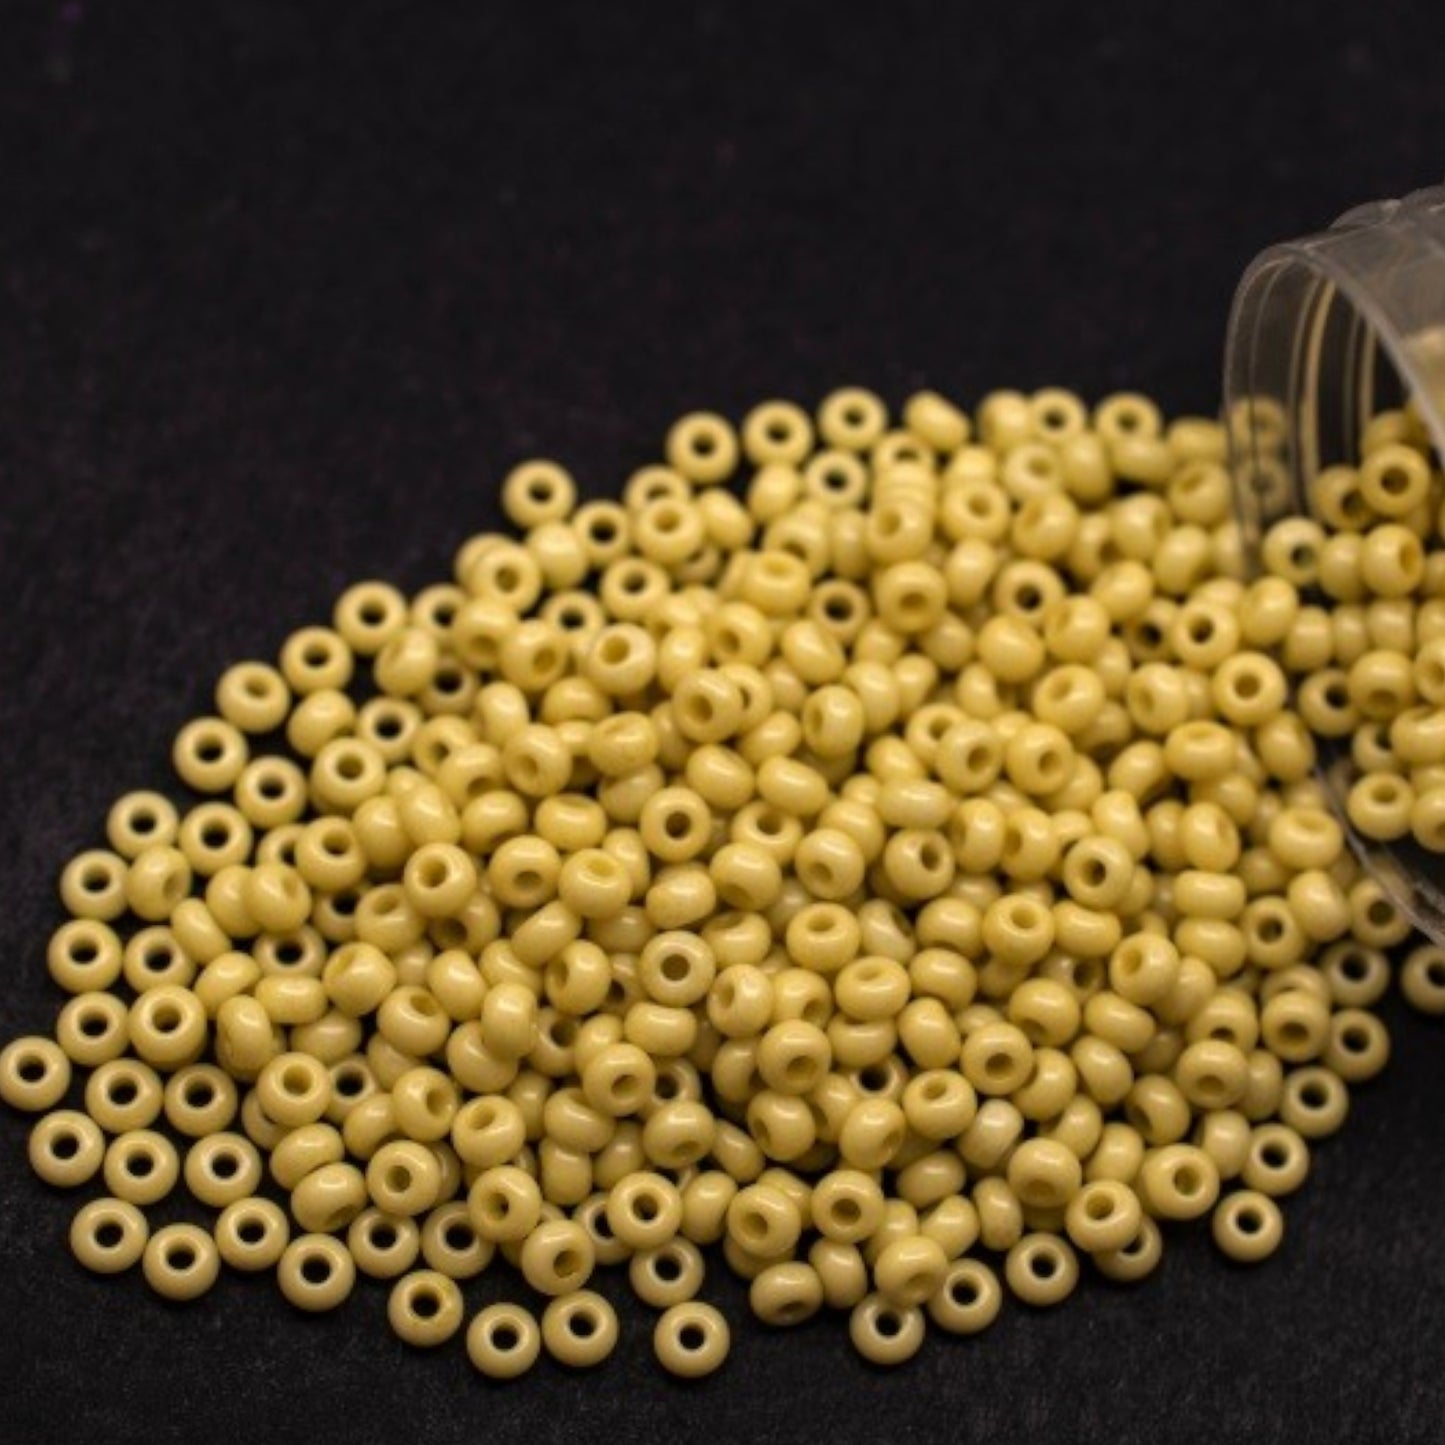 03651 Czech seed beads PRECIOSA round 10/0 light yellow. Chalk - Solgel Dyed.